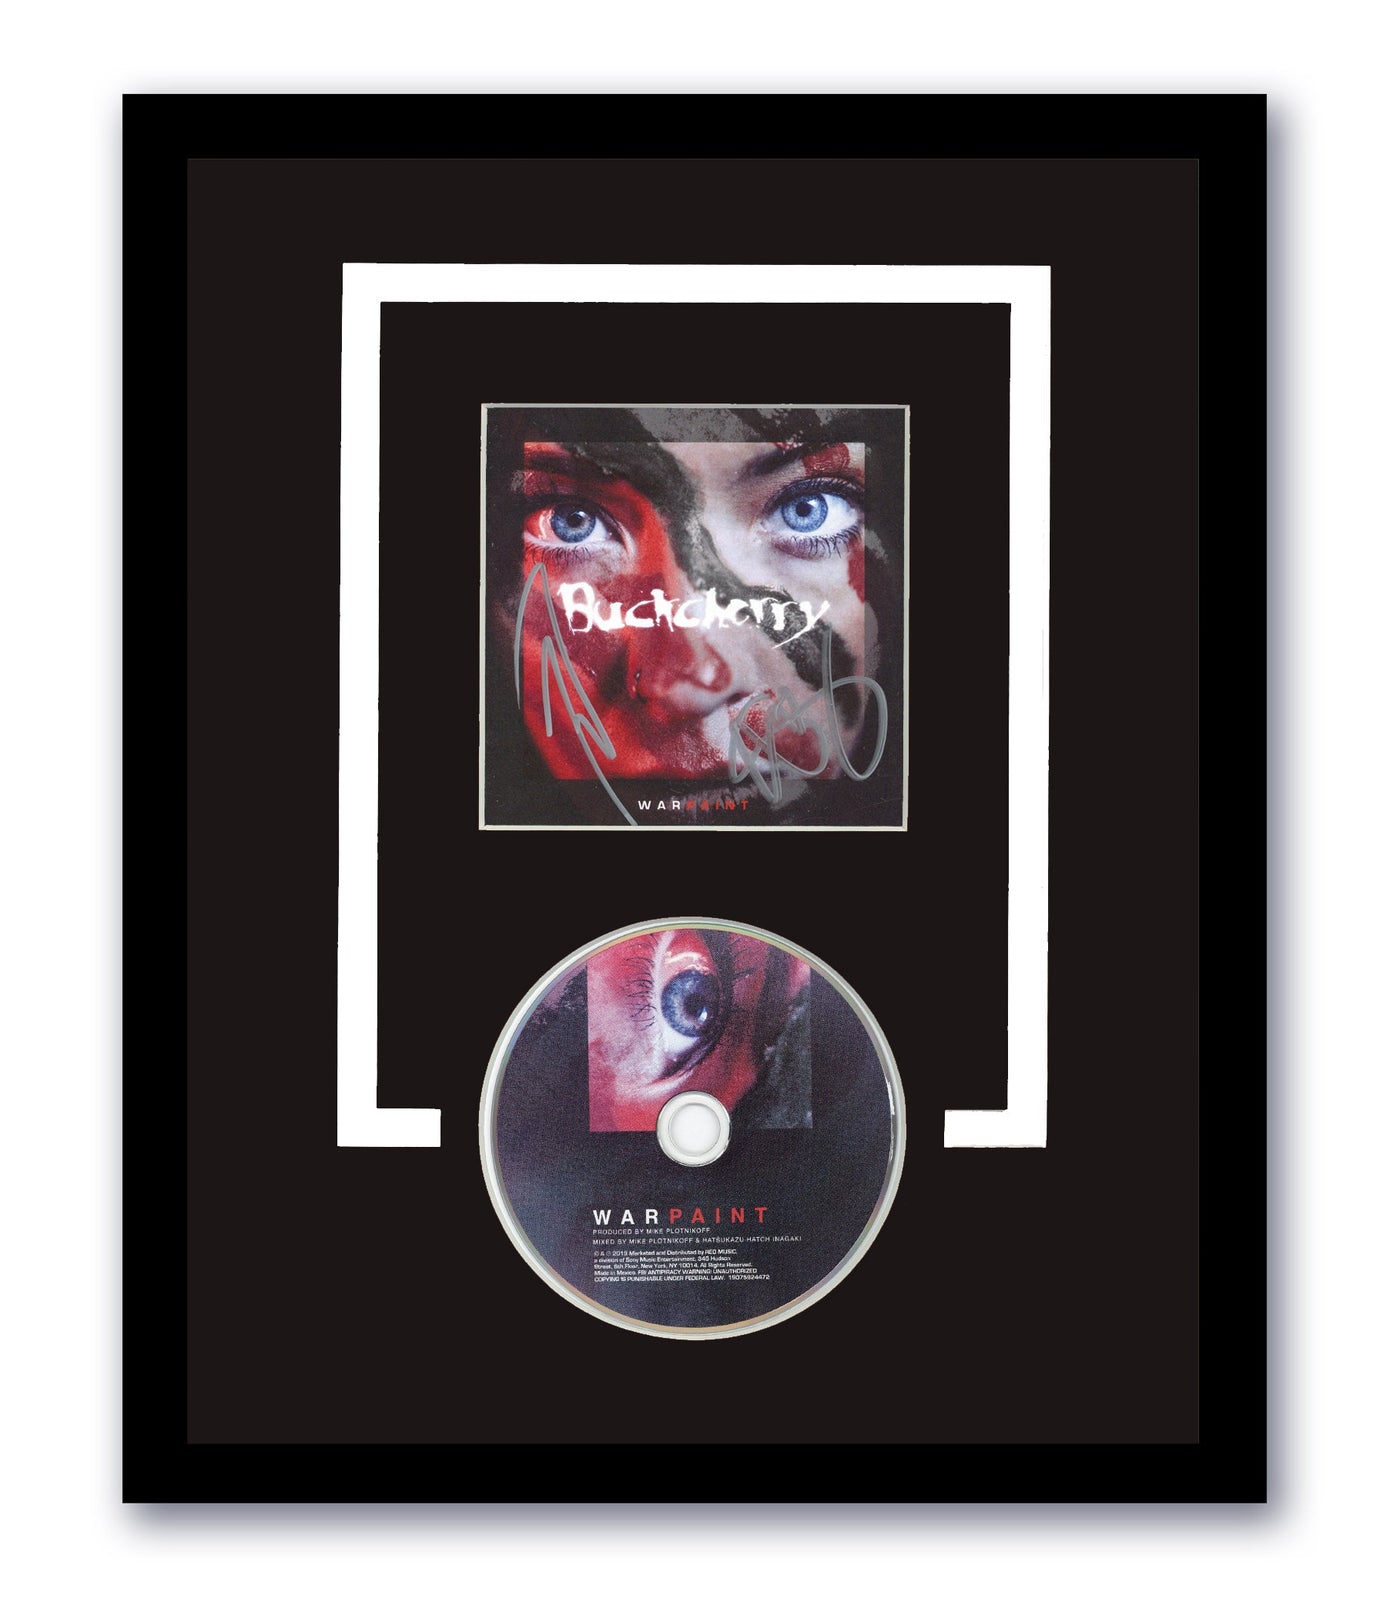 Buckcherry Signed Warpaint CD Custom Framed 11x14 Autographed AutographCOA